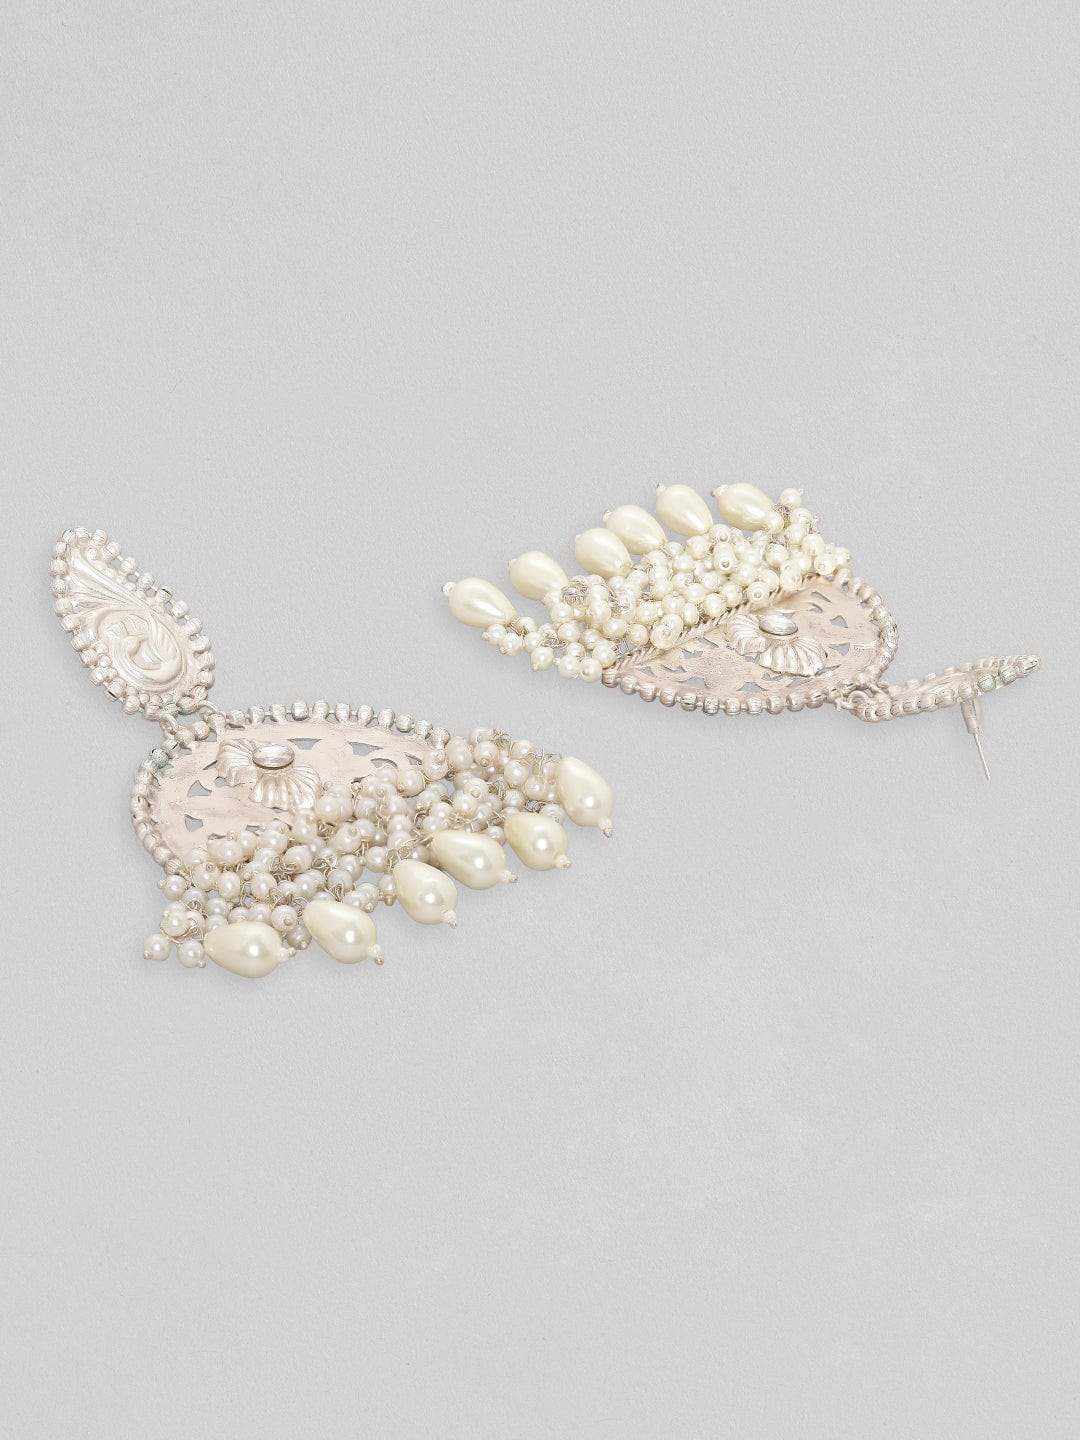 Rubans Silver Toned Drop Earrings With Pearl Hangings. Earrings